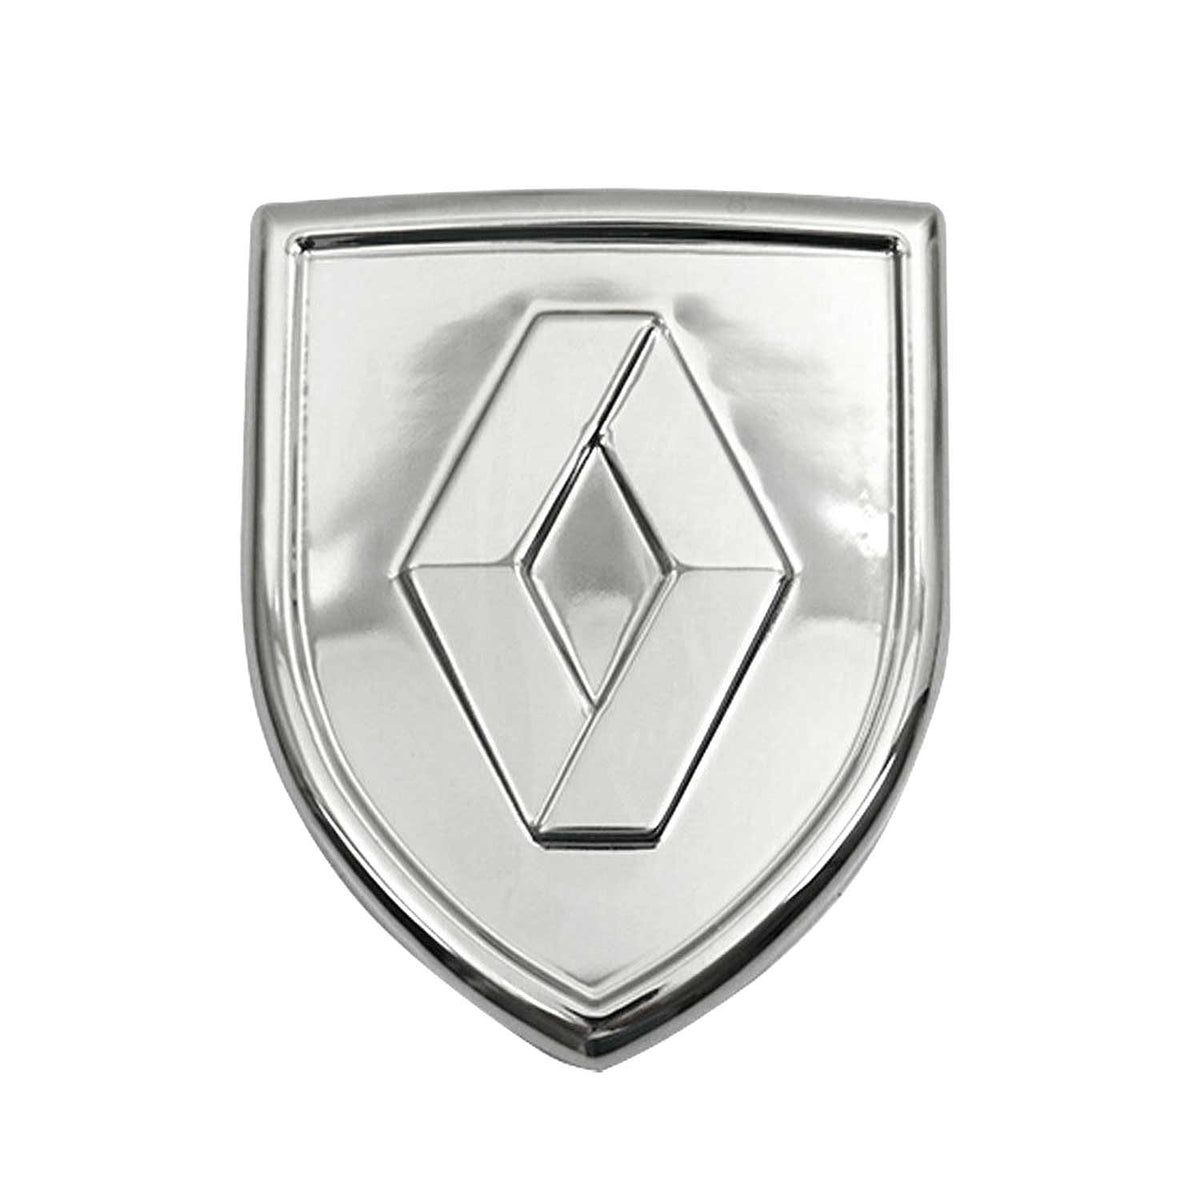 Vorne Emblemstelle Emblem Rahmen für Dacia Logan 2004-2012 Edelstahl Silber 1tlg